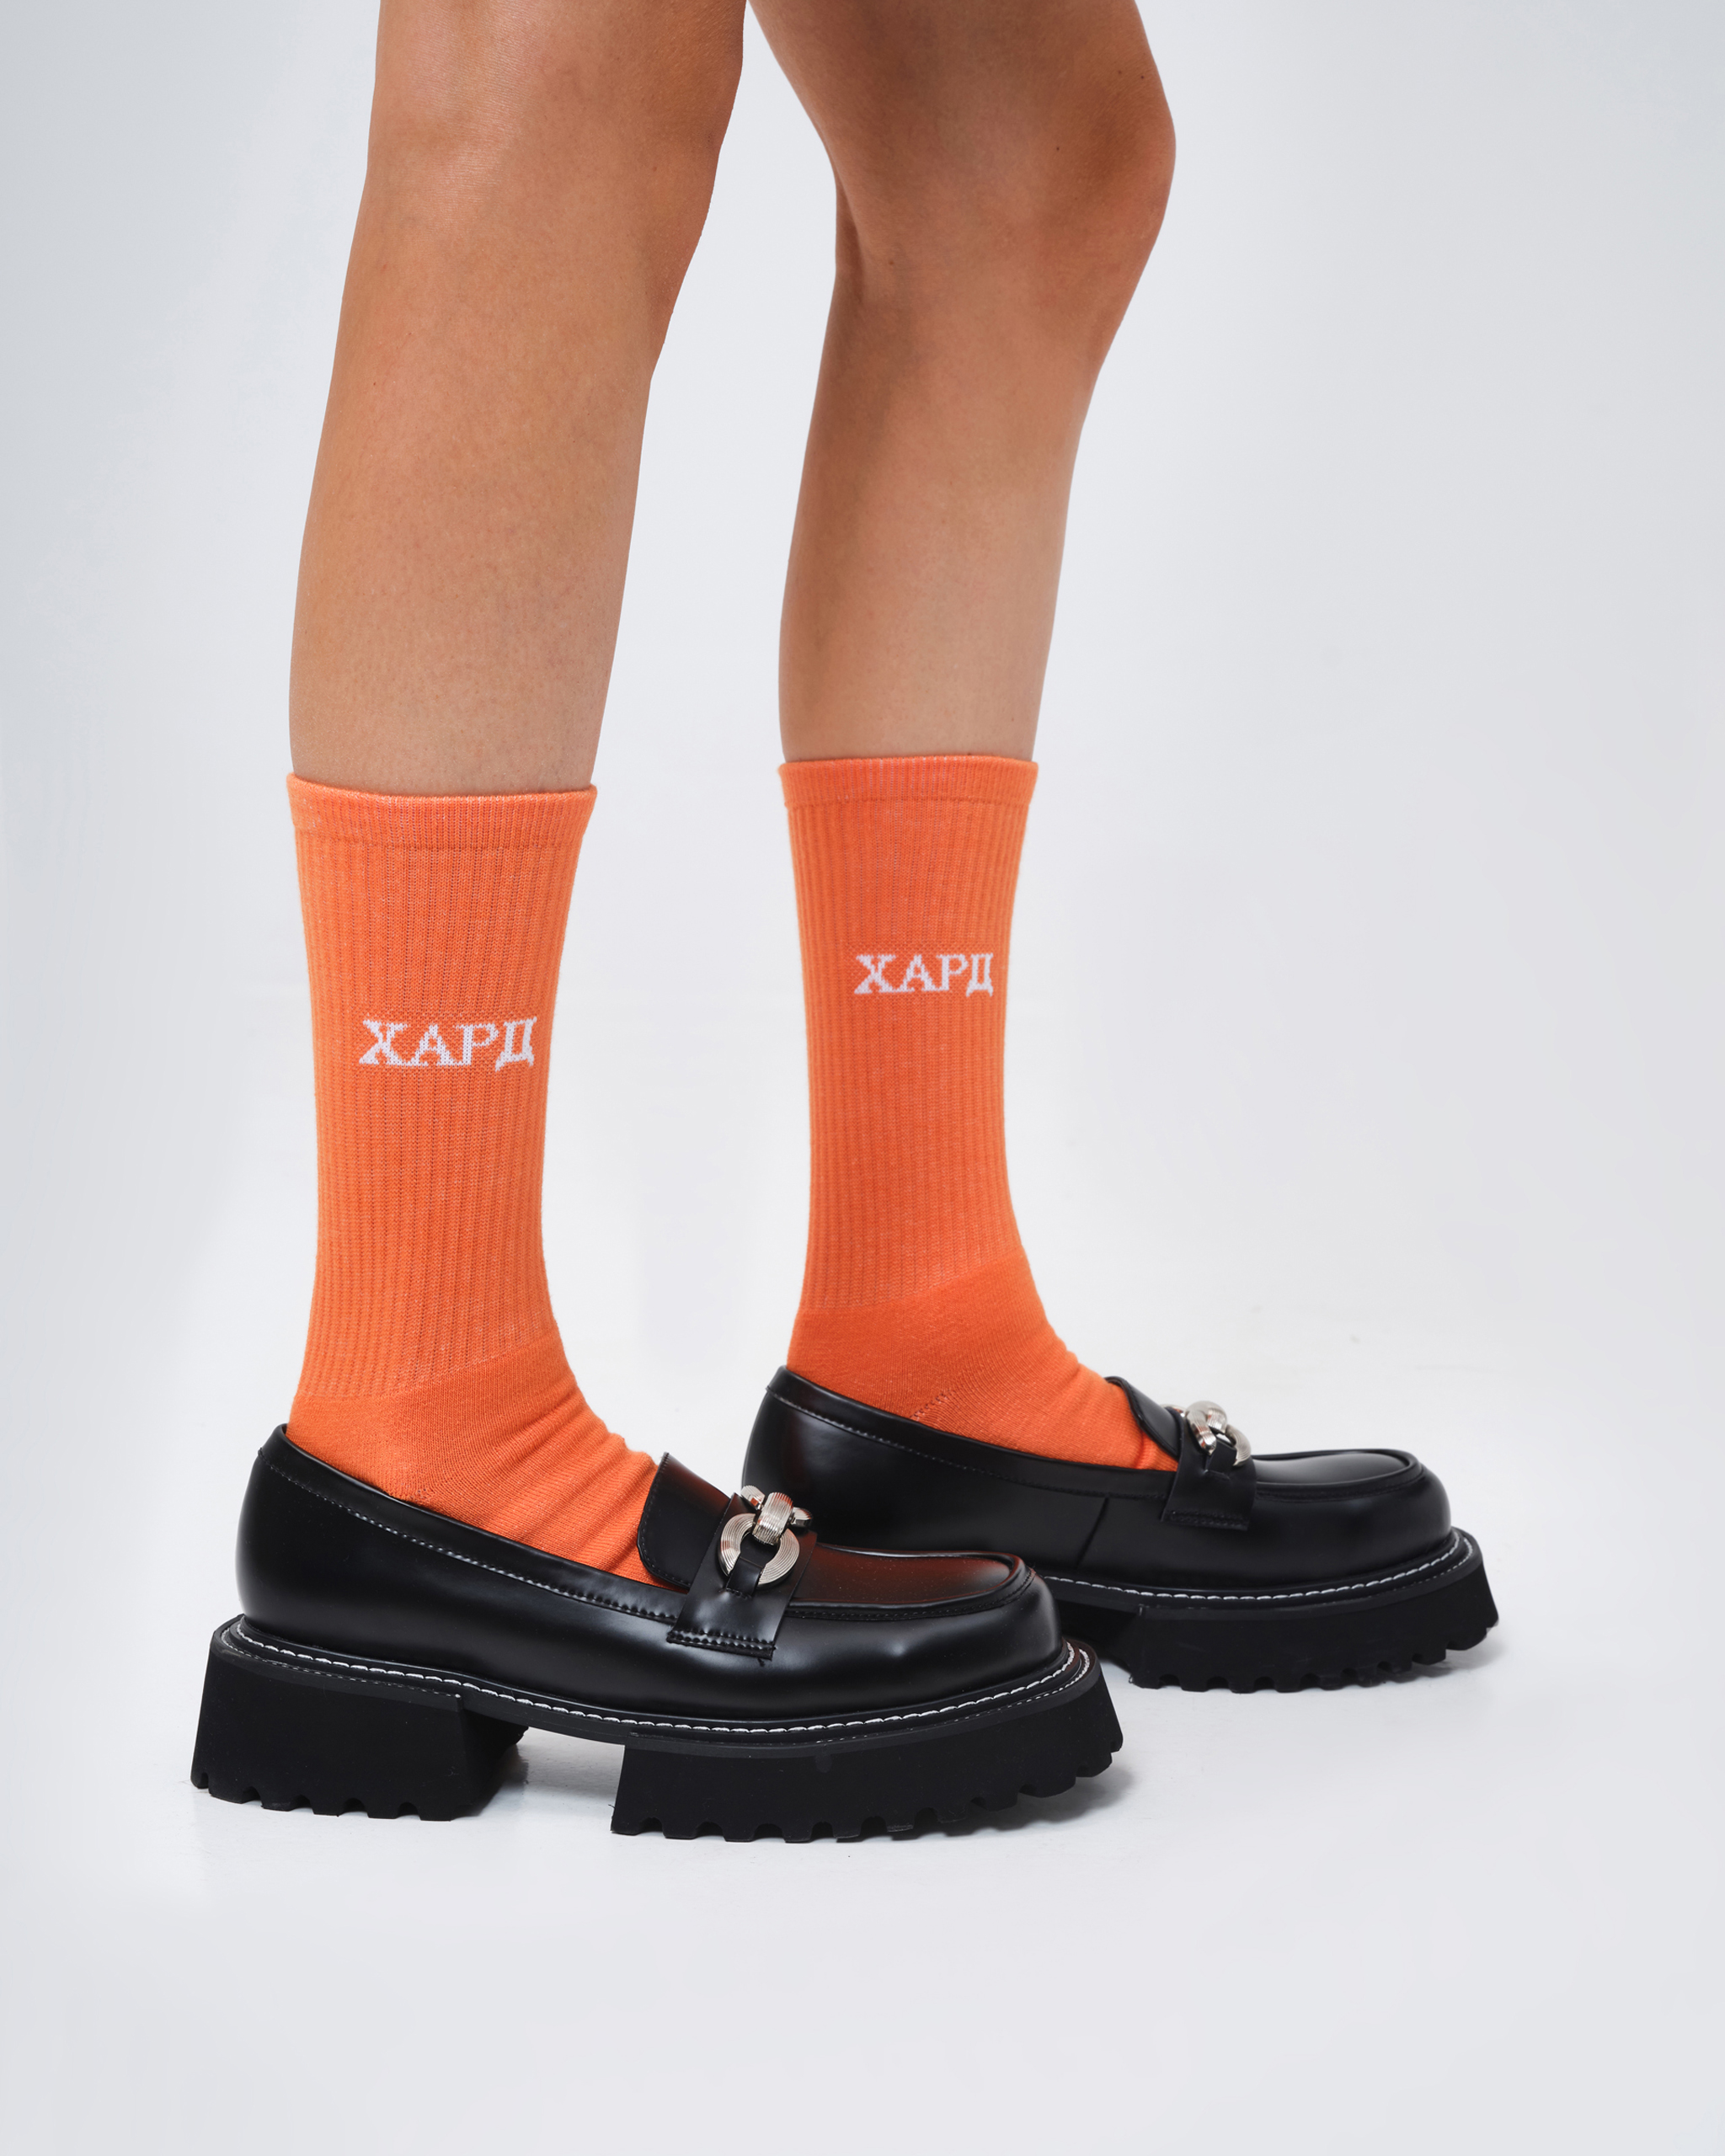 Burned Orange Socks